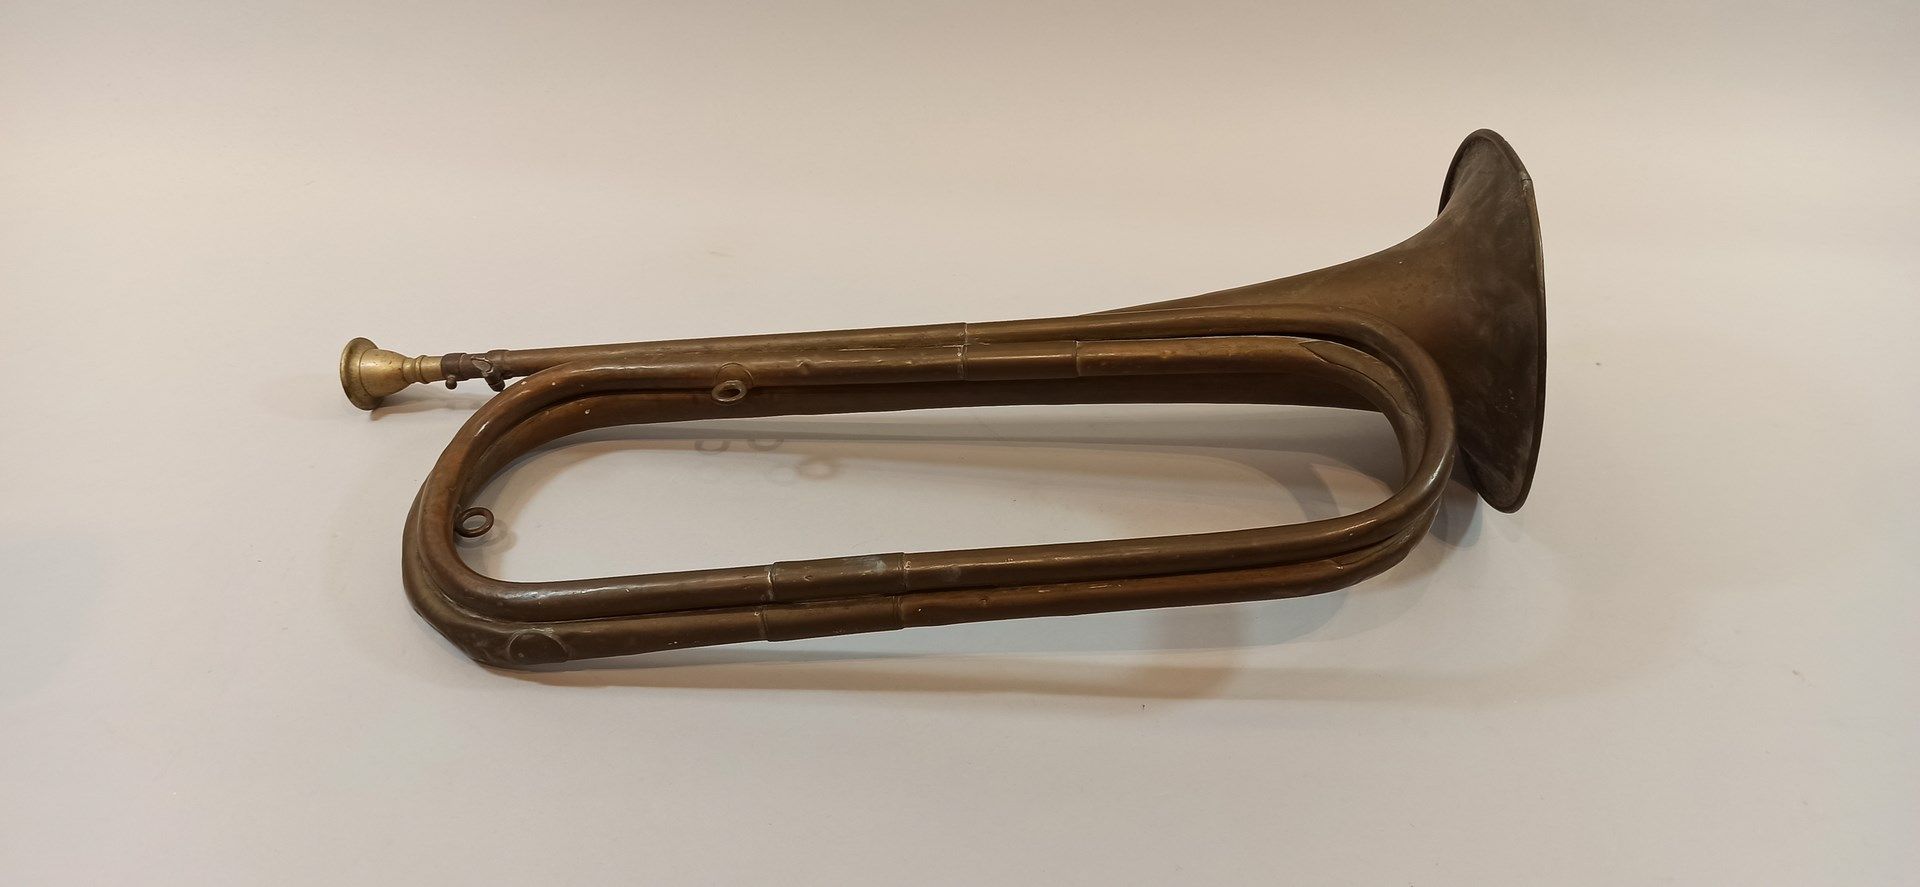 Null Couesnon & Cie Messing-Horn in Paris datiert (19)11. 

Länge: 59 cm

Schock&hellip;